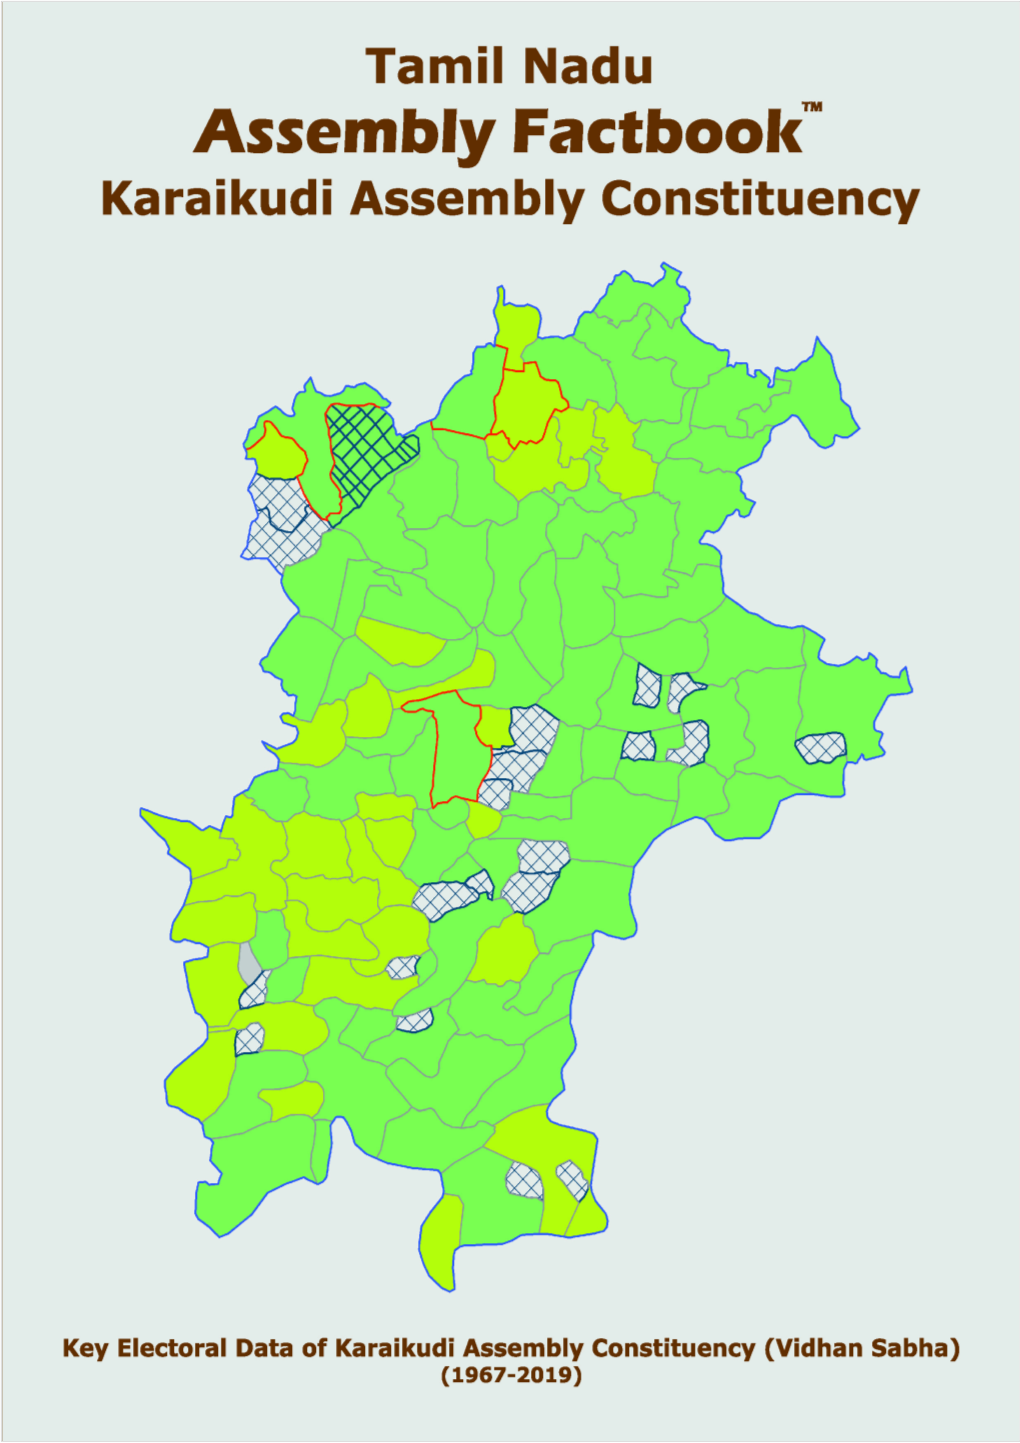 Karaikudi Assembly Tamil Nadu Factbook